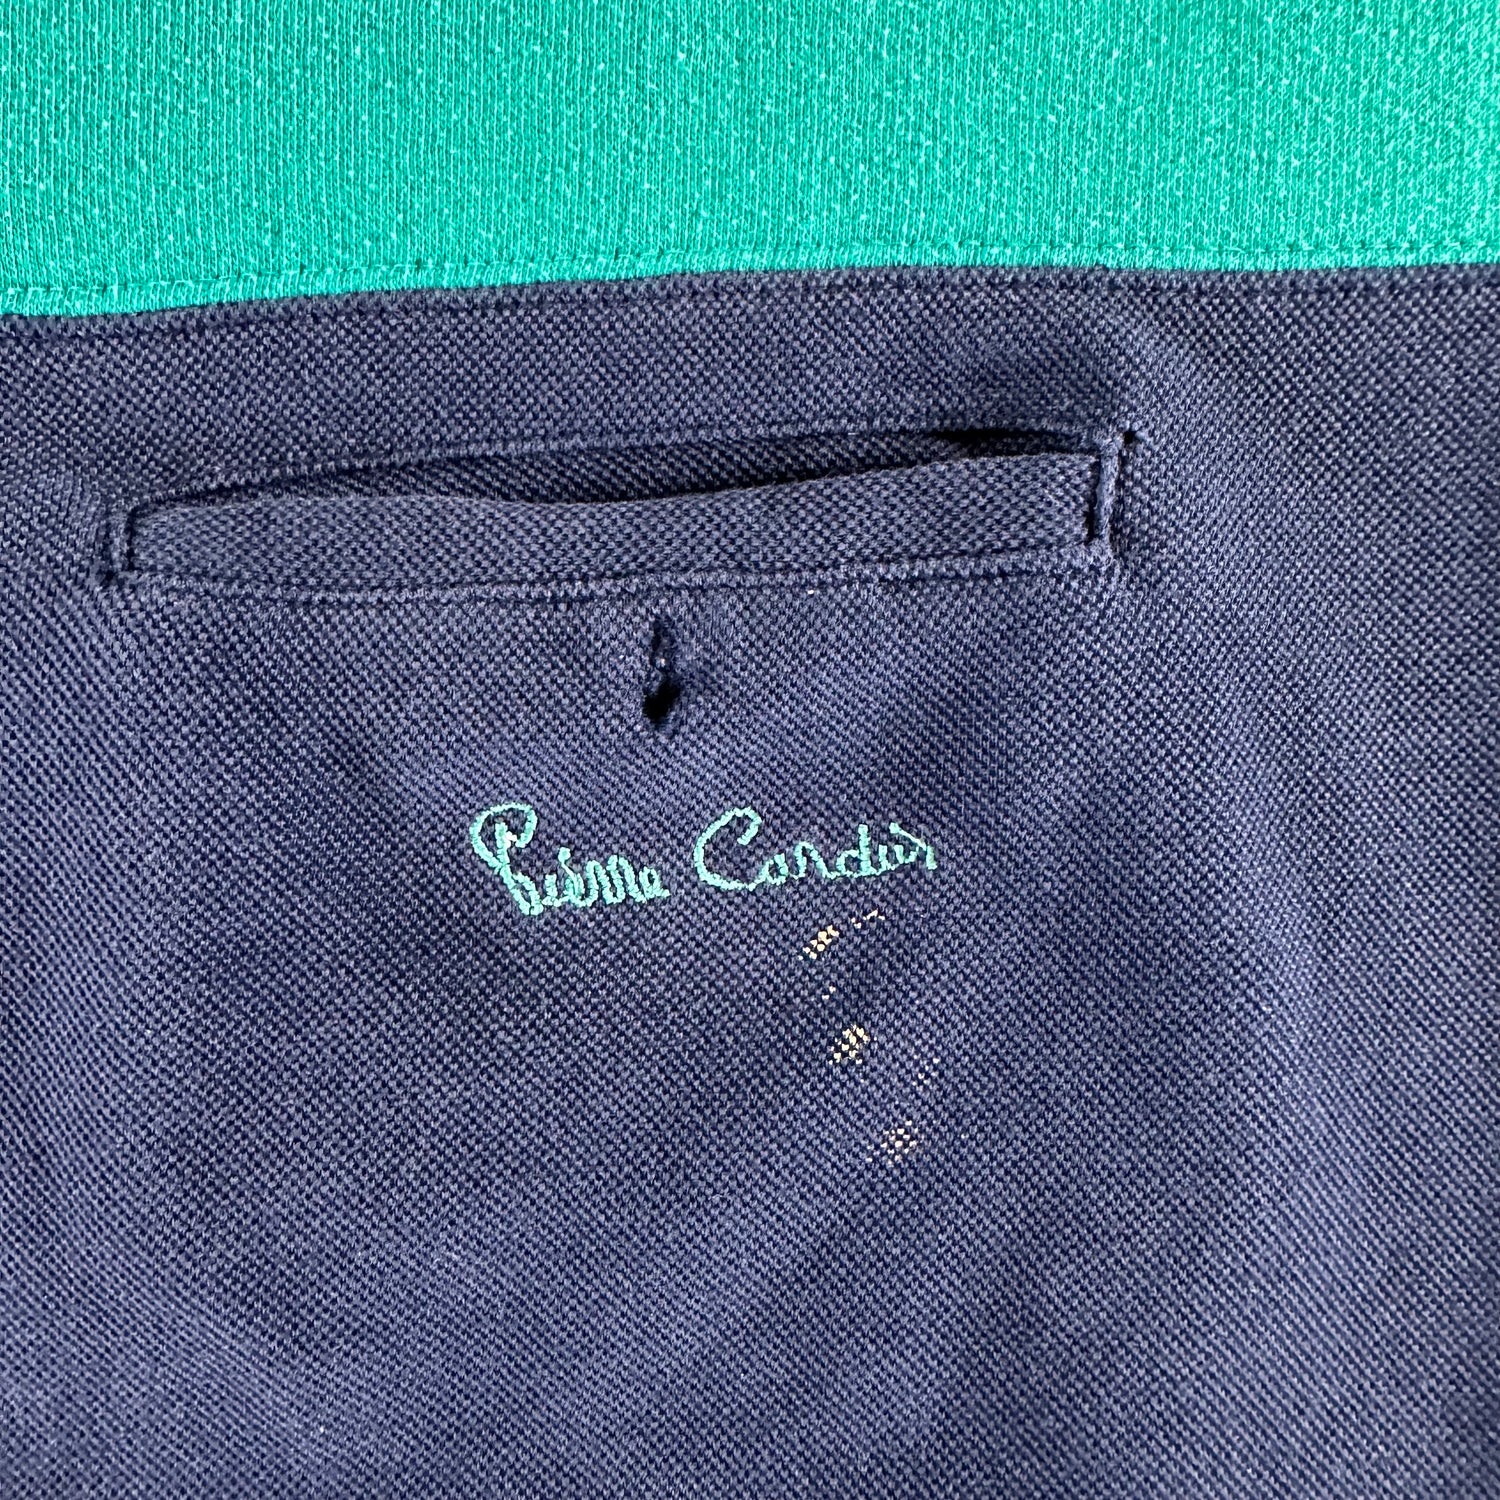 Vintage 1990s Pierre Cardin Sweatshirt size Large